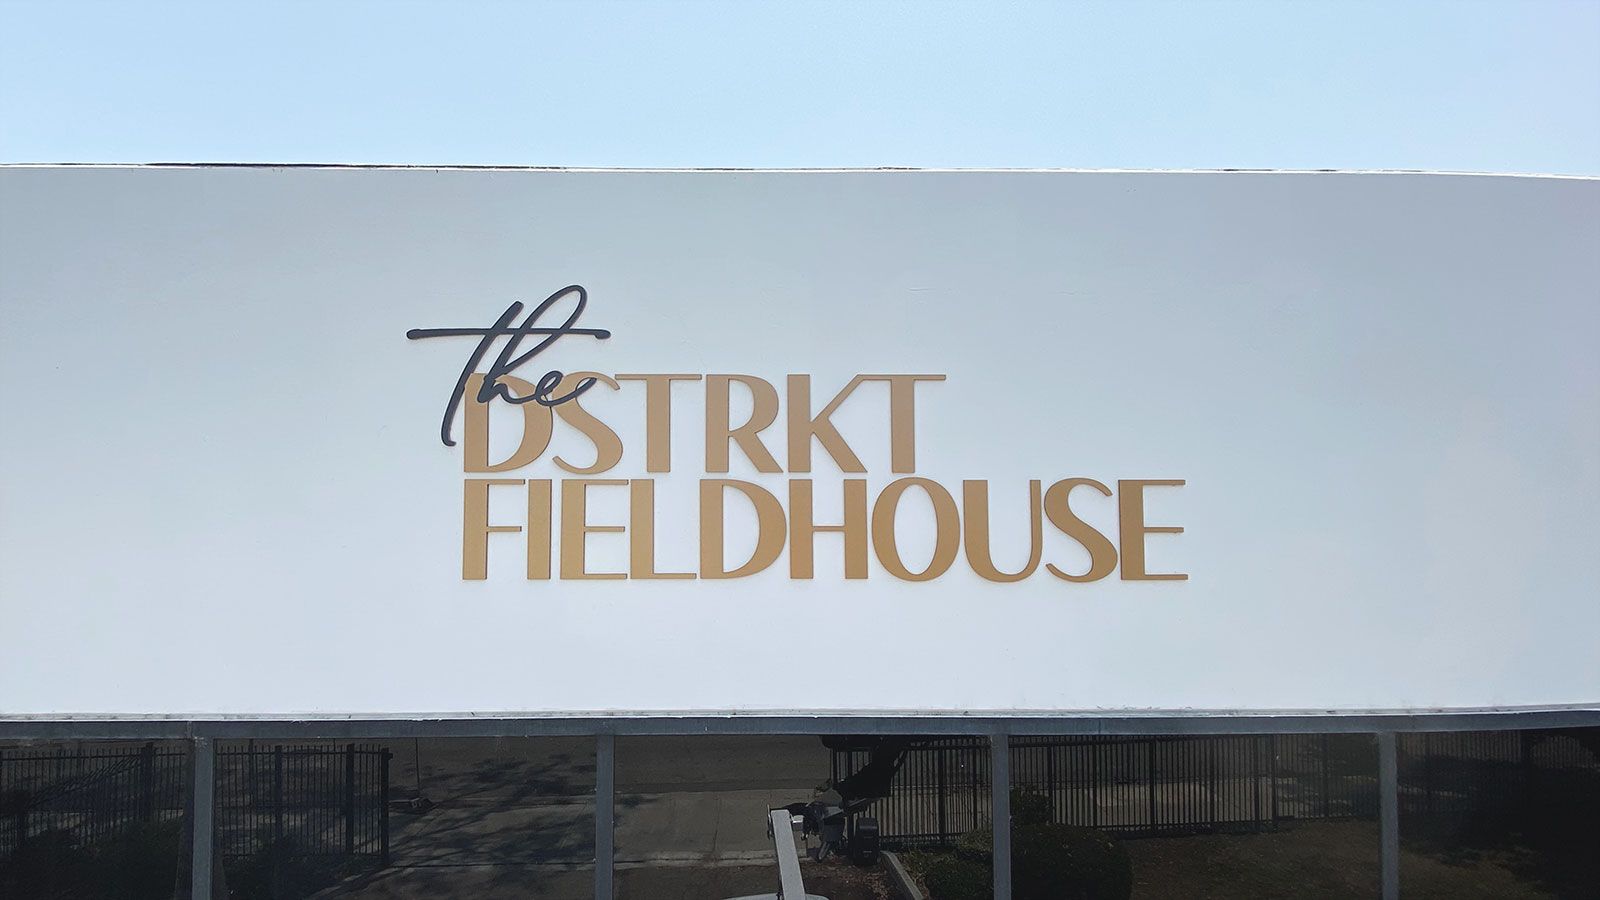 the dstrkt fieldhouse building sign